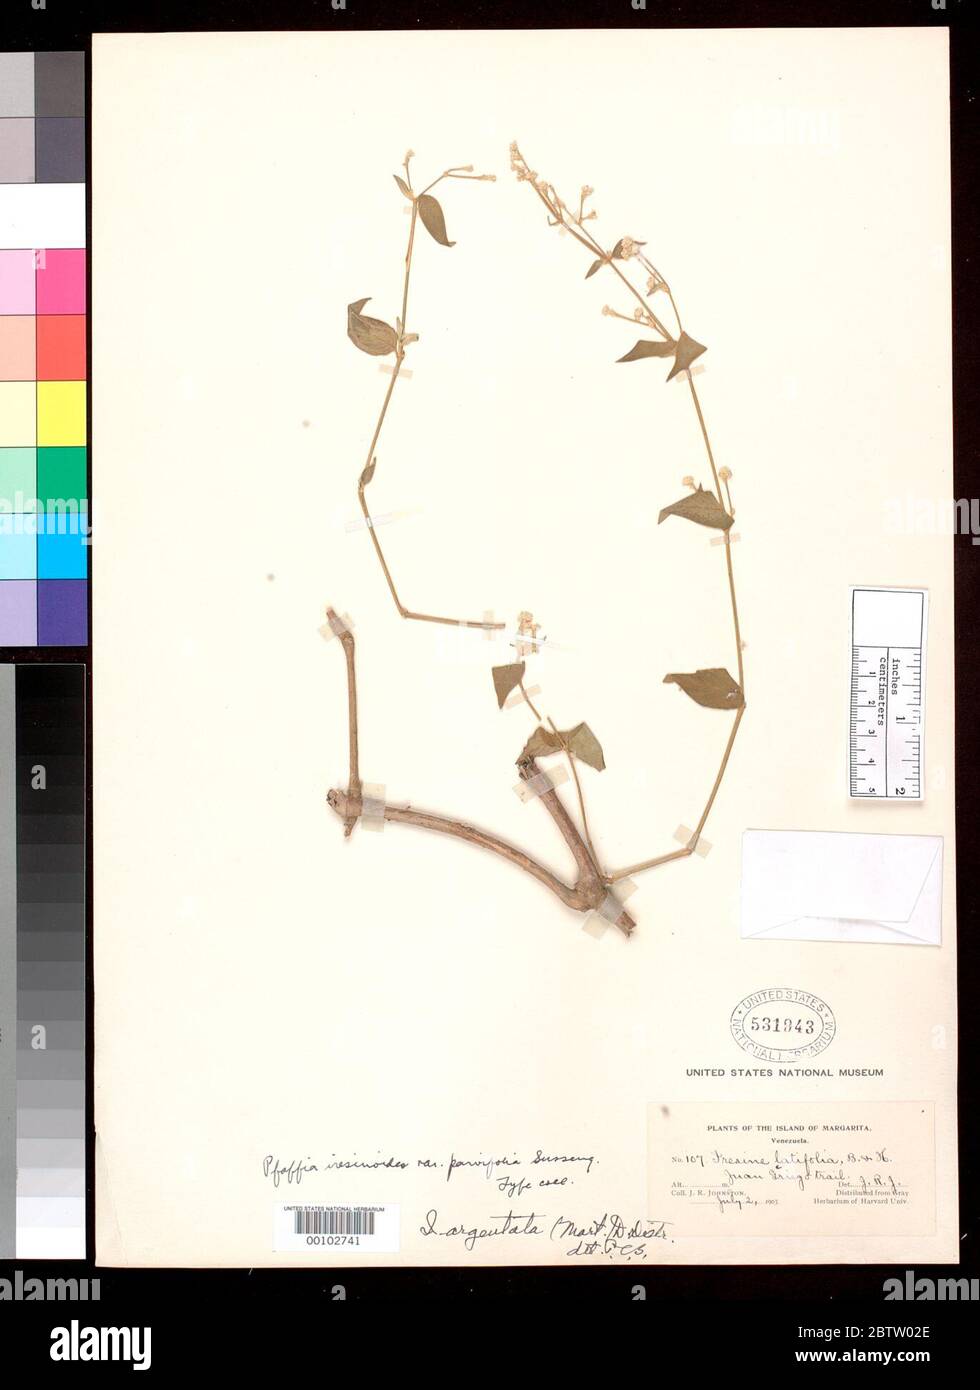 Pfaffia iresinoides var parvifolia Suess. Stock Photo